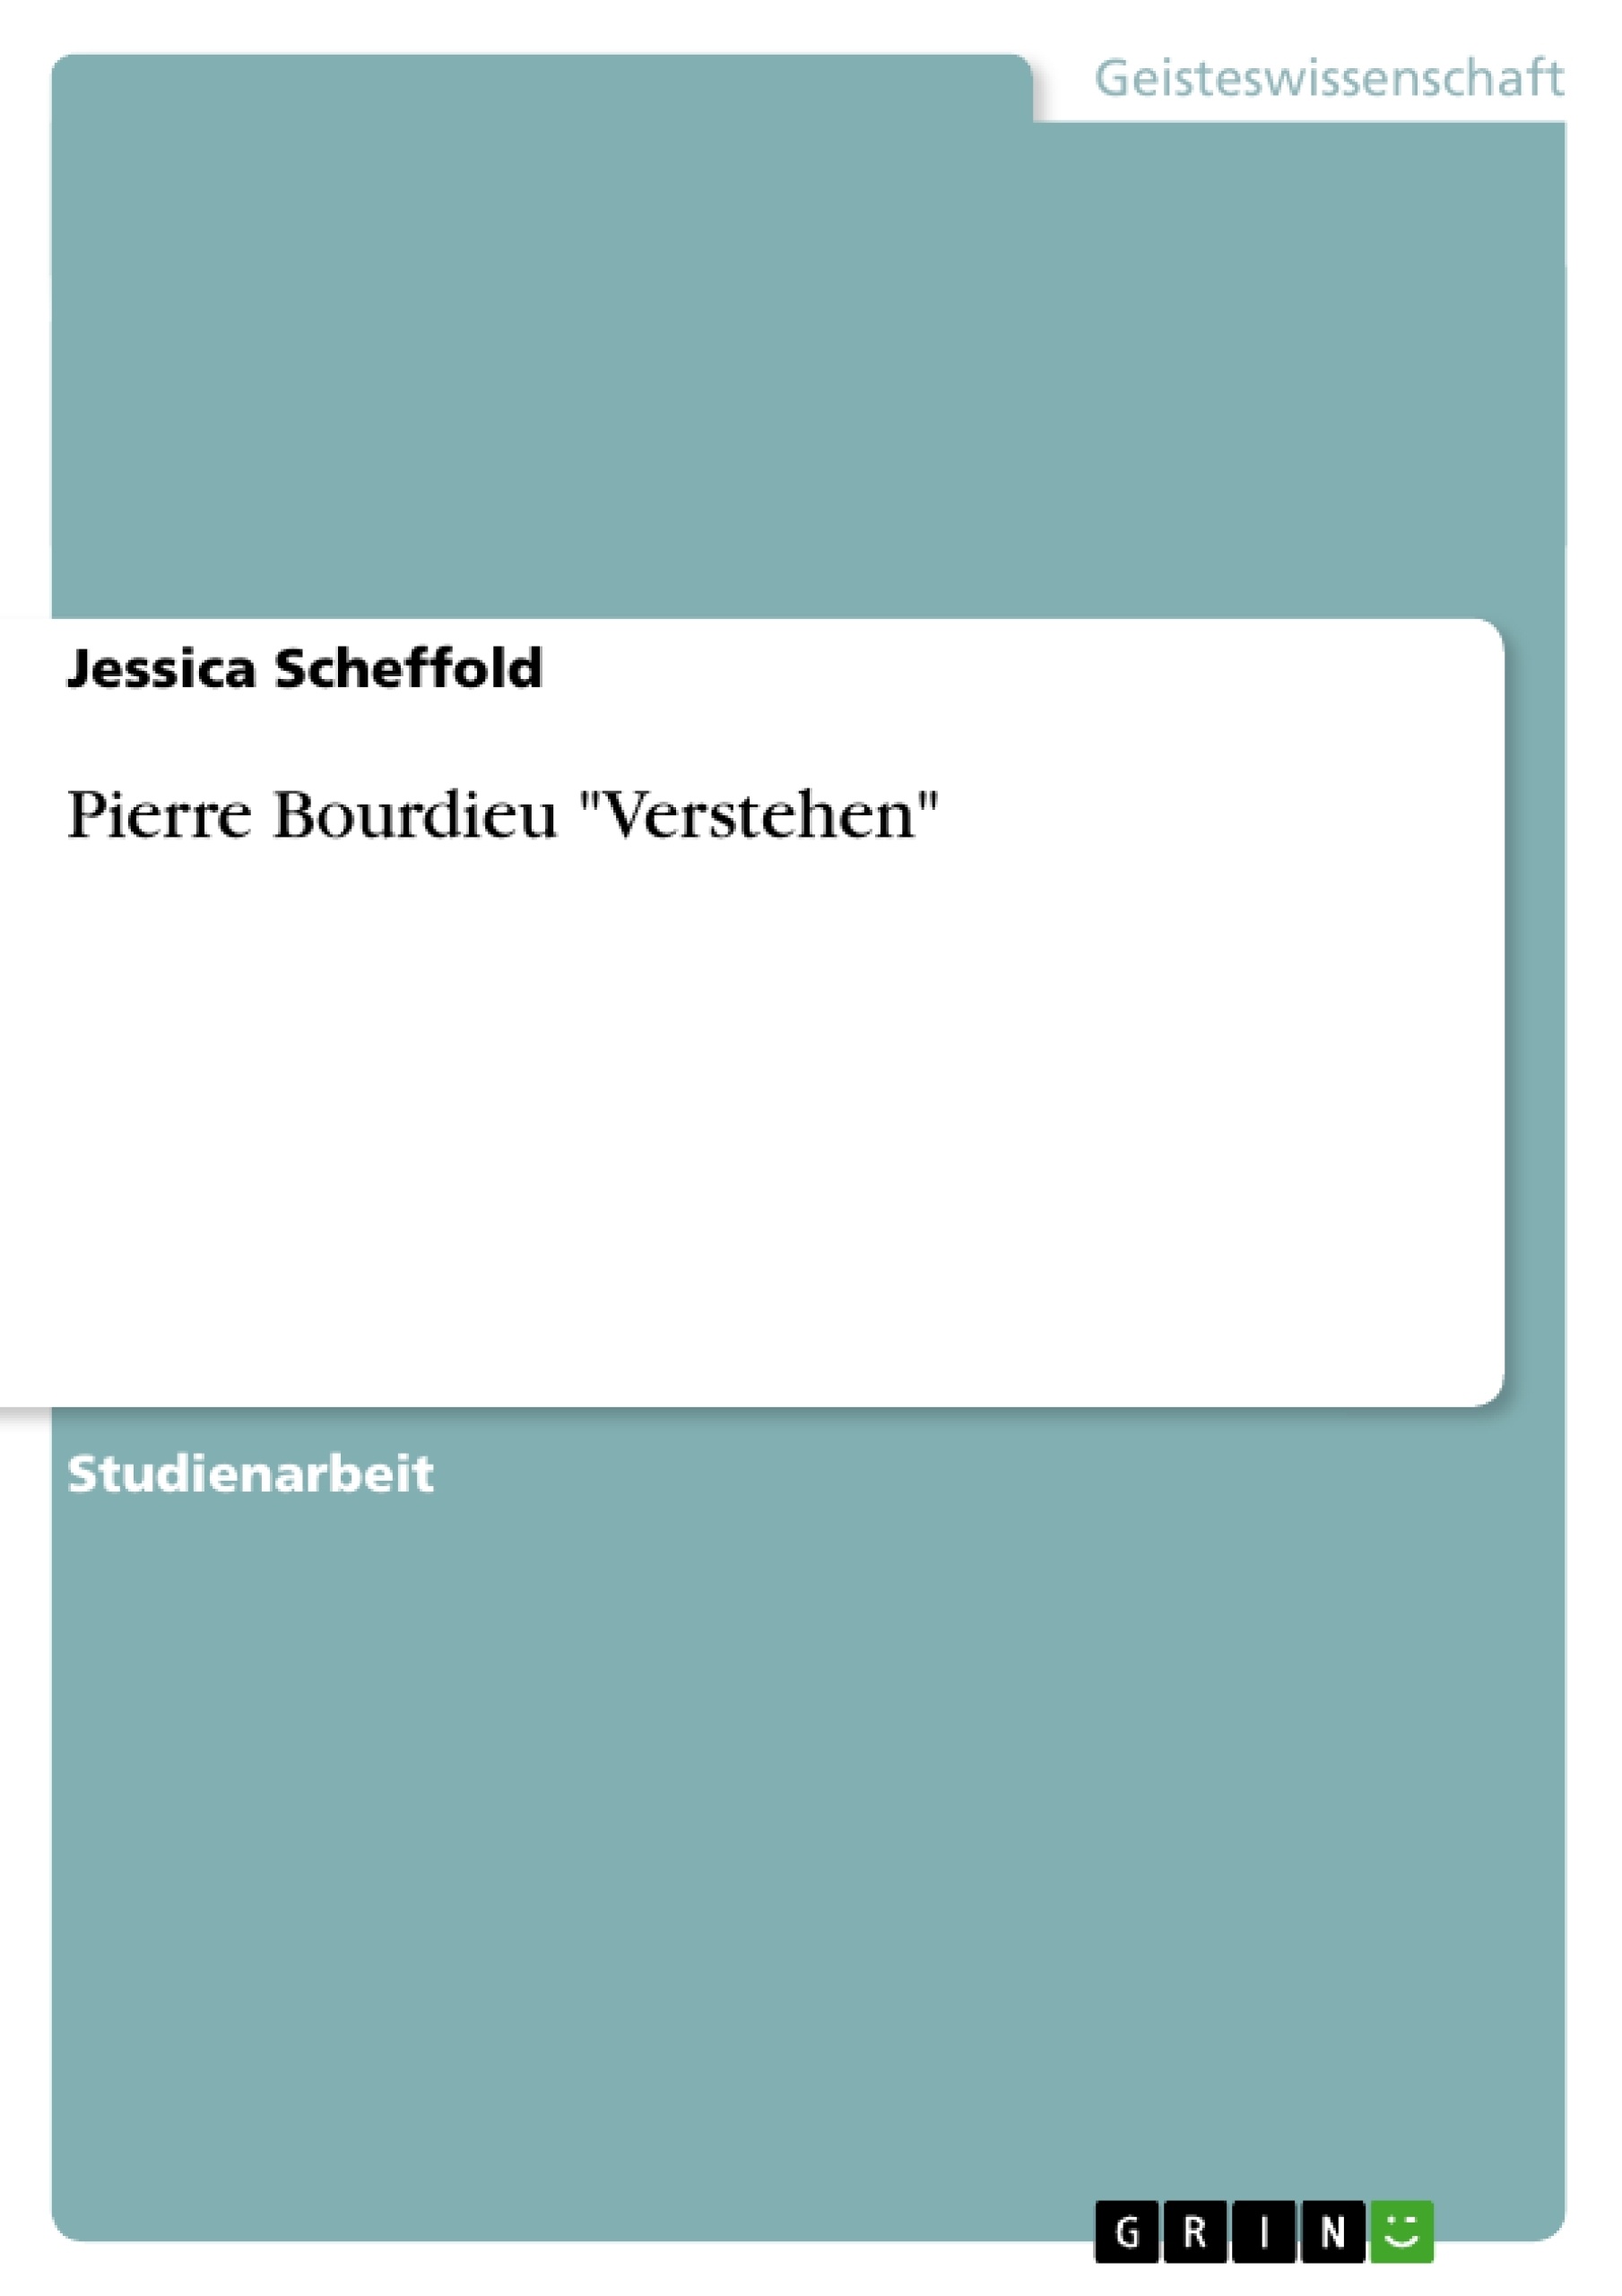 Titre: Pierre Bourdieu "Verstehen"